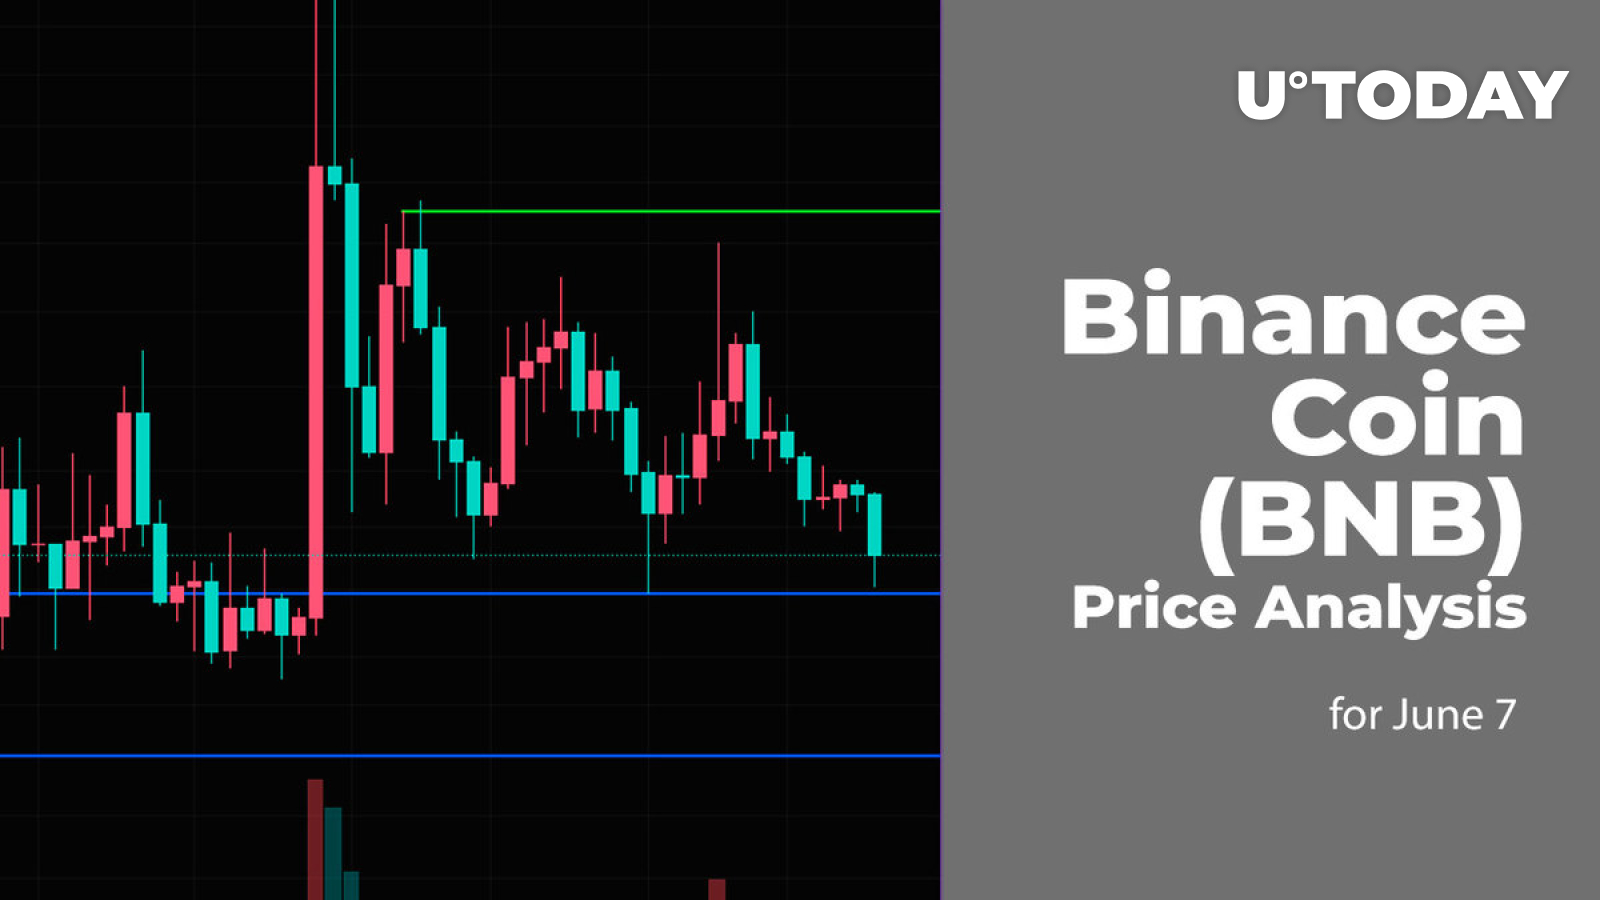 Binance Coin (BNB) Price Analysis for June 7